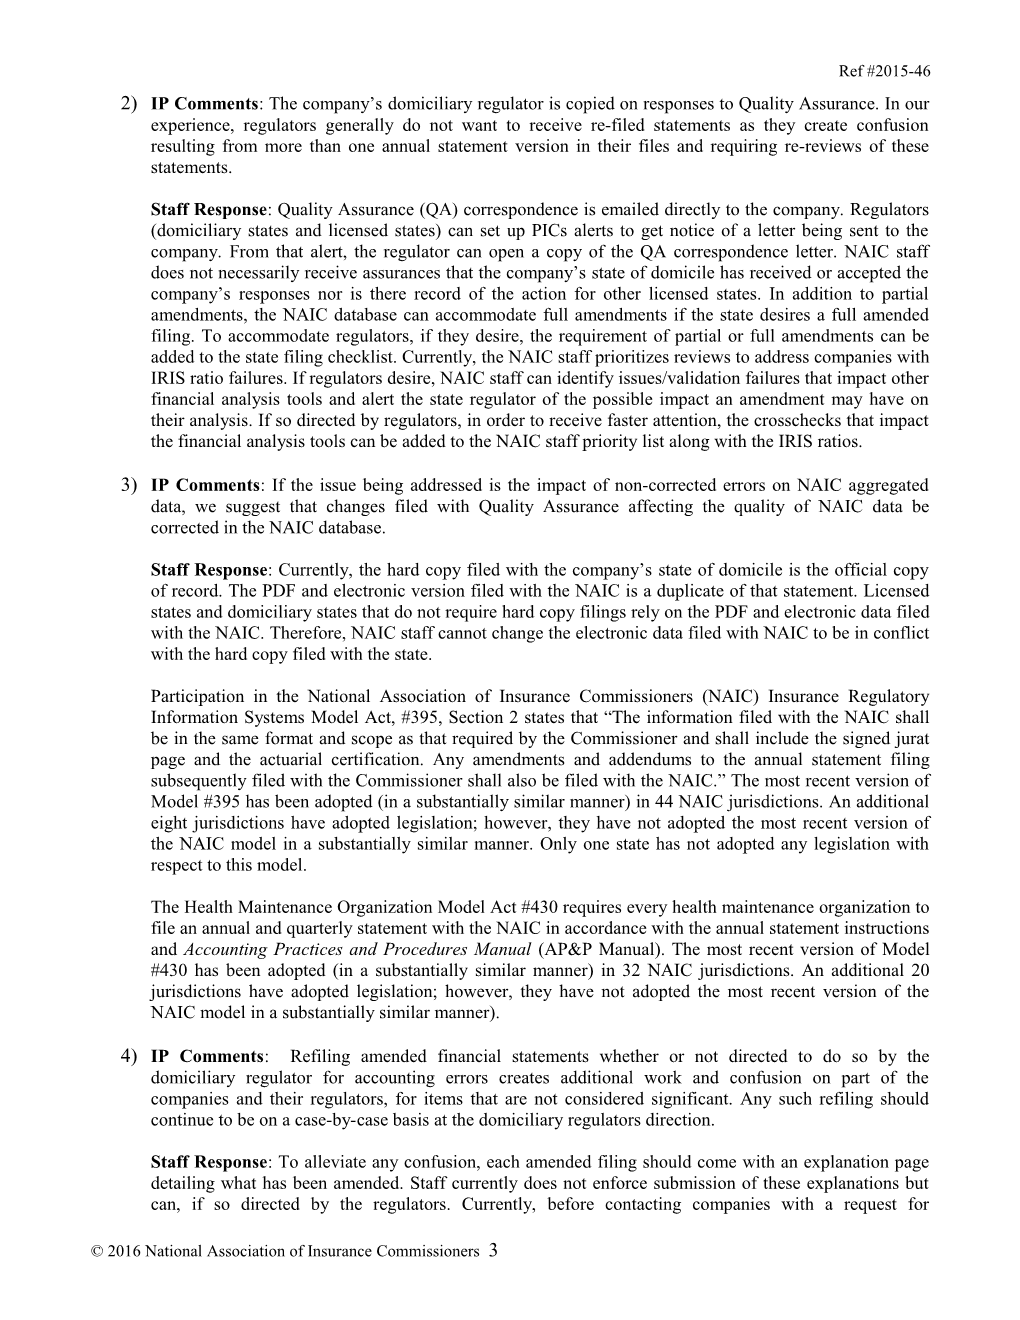 Statutory Accounting Principles Working Group s6